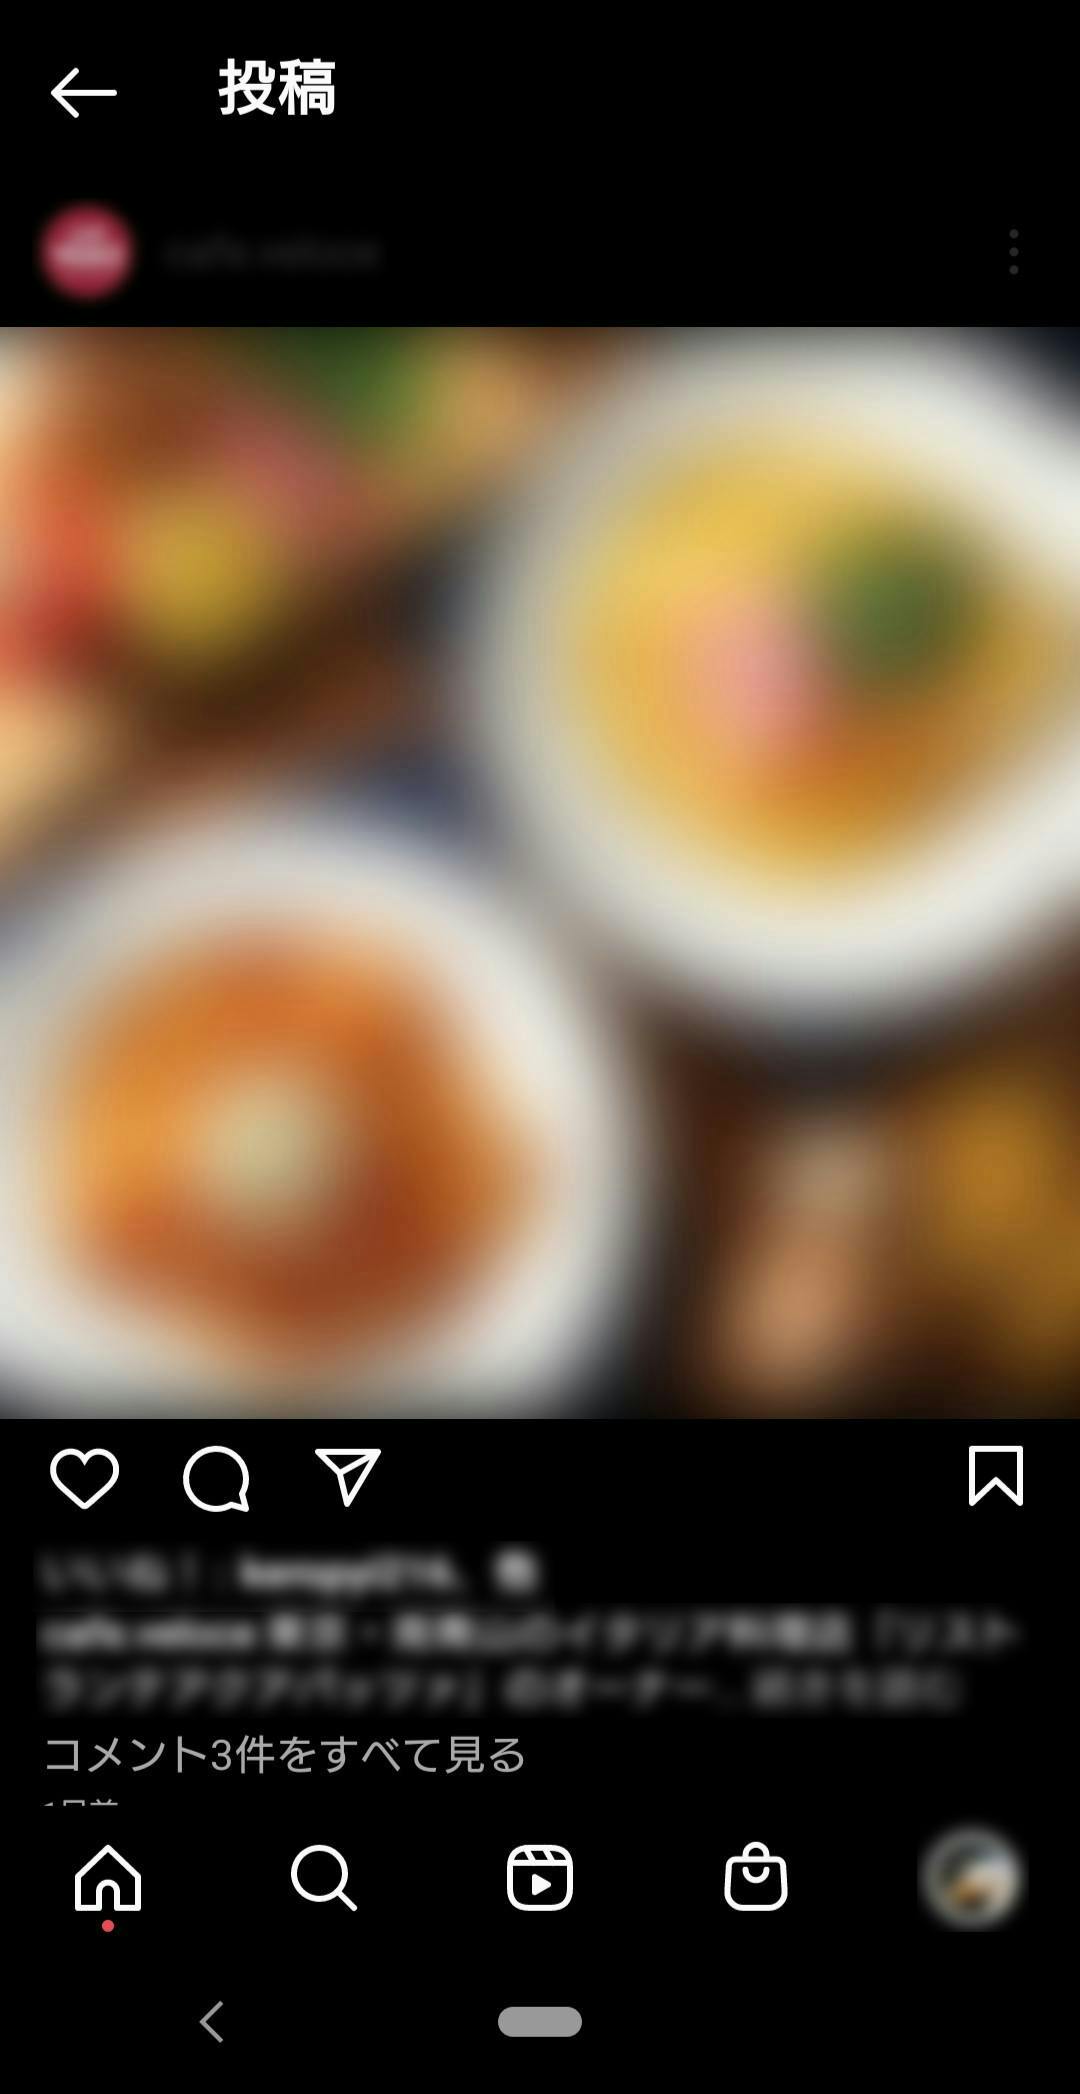 Captured image of Instagram account